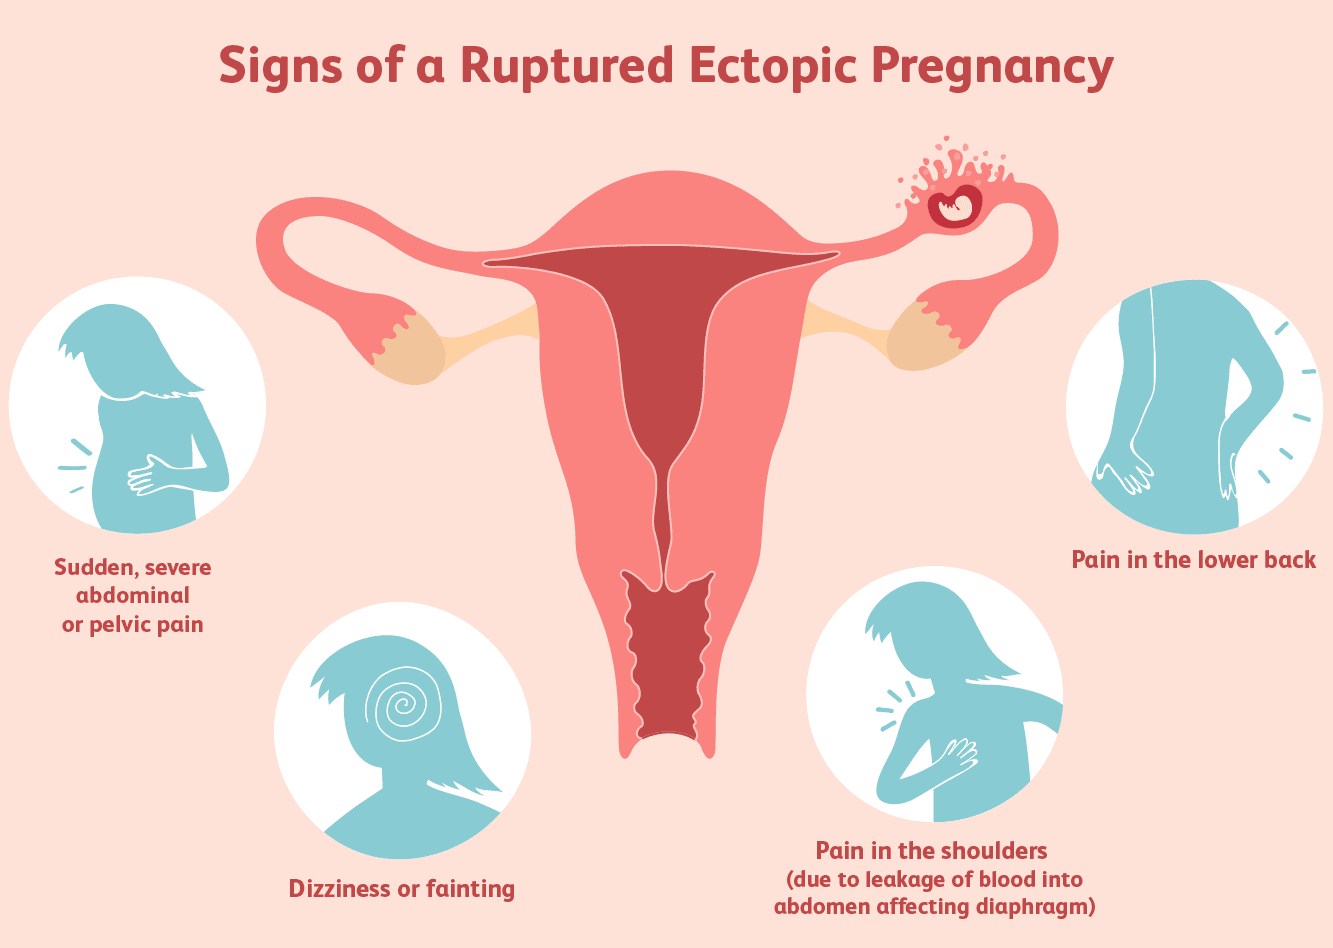 ECTOPIC PREGNANCY TREATMENTS